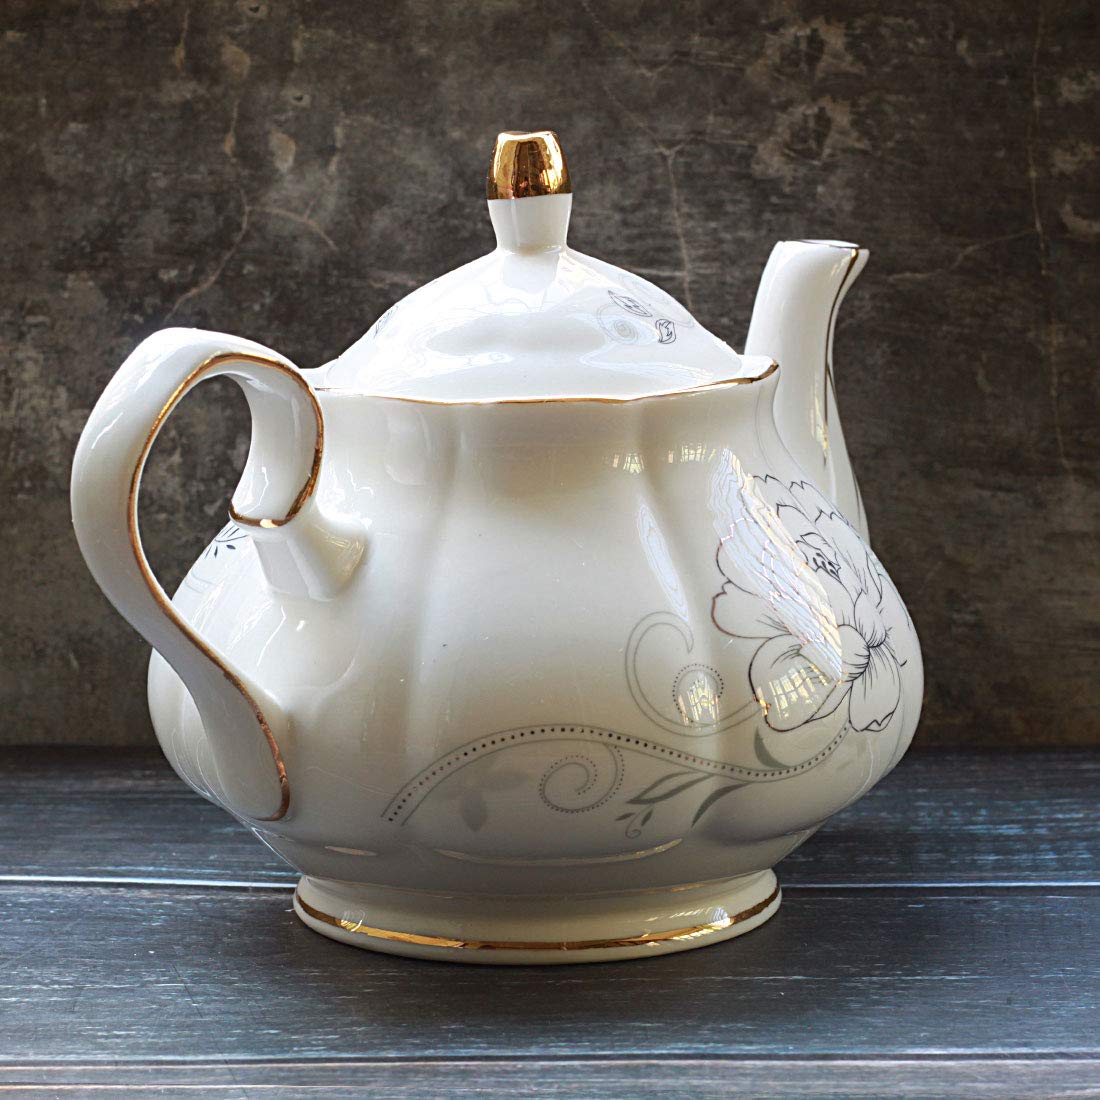 Jomop Ceramic Tea pot Floral Design White 855ml About 4 Cups (Gold)